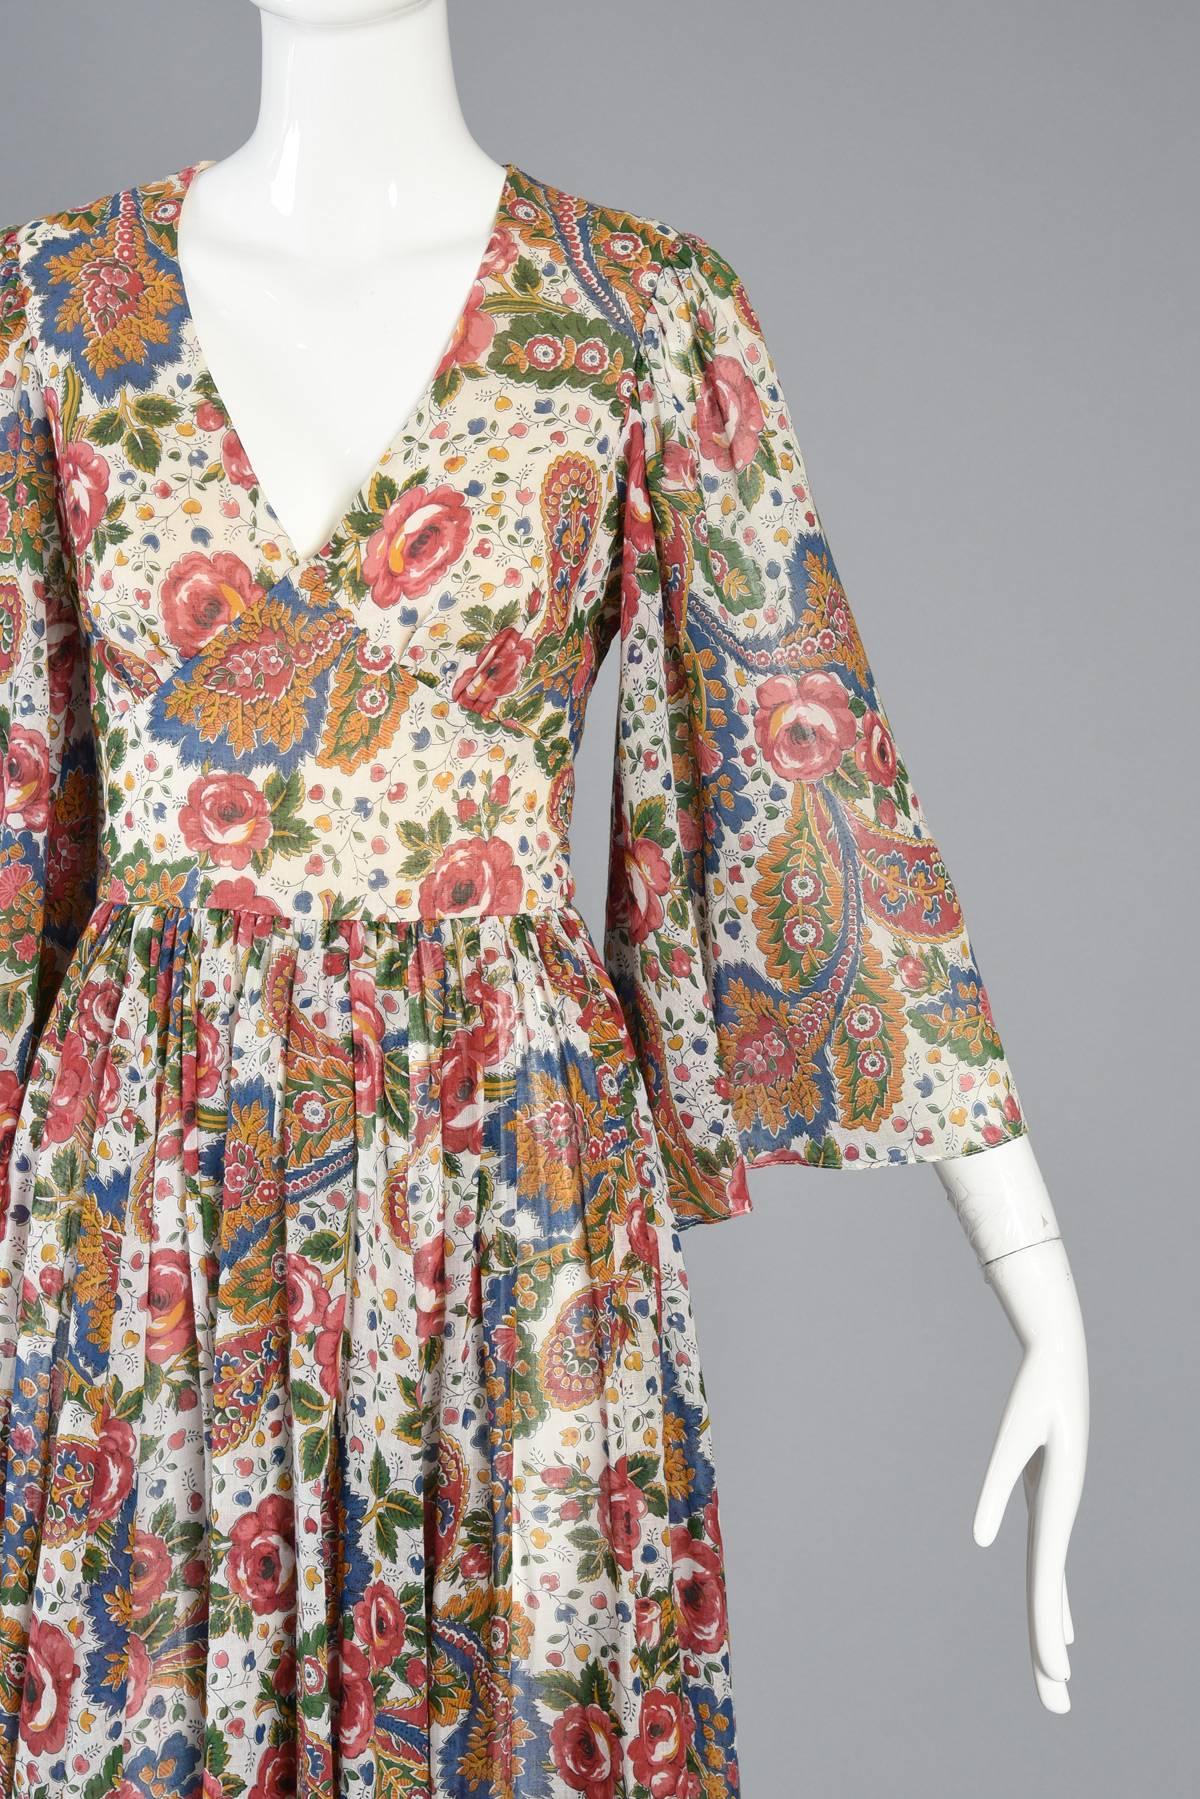 Women's Romantic 1970s Gauzy Boho Maxi Dress with Angel Sleeves